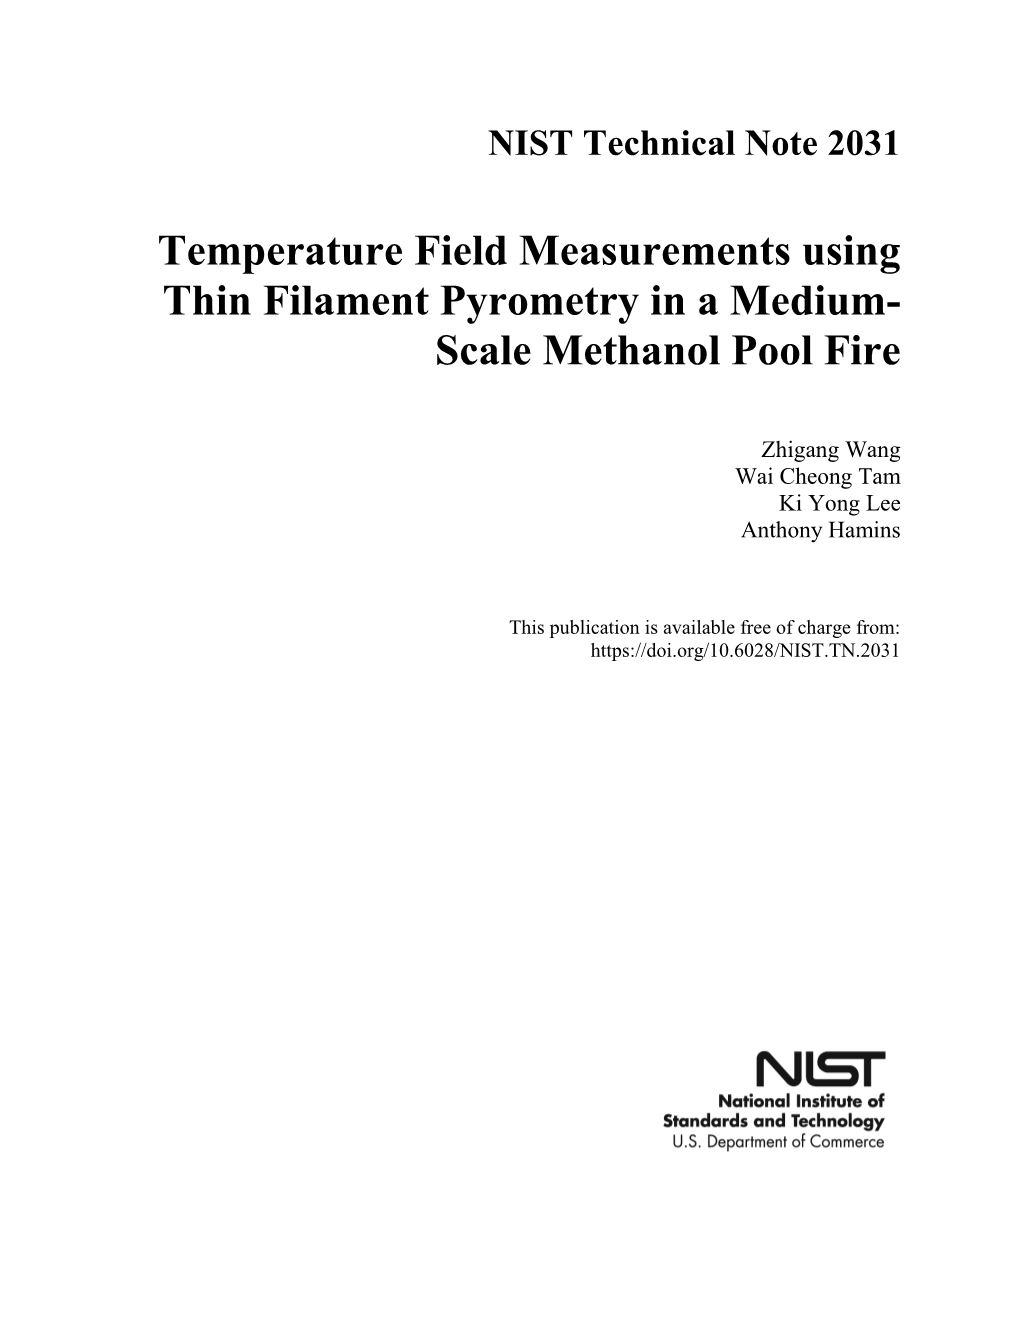 Temperature Field Measurements Using Thin Filament Pyrometry in a Medium- Scale Methanol Pool Fire